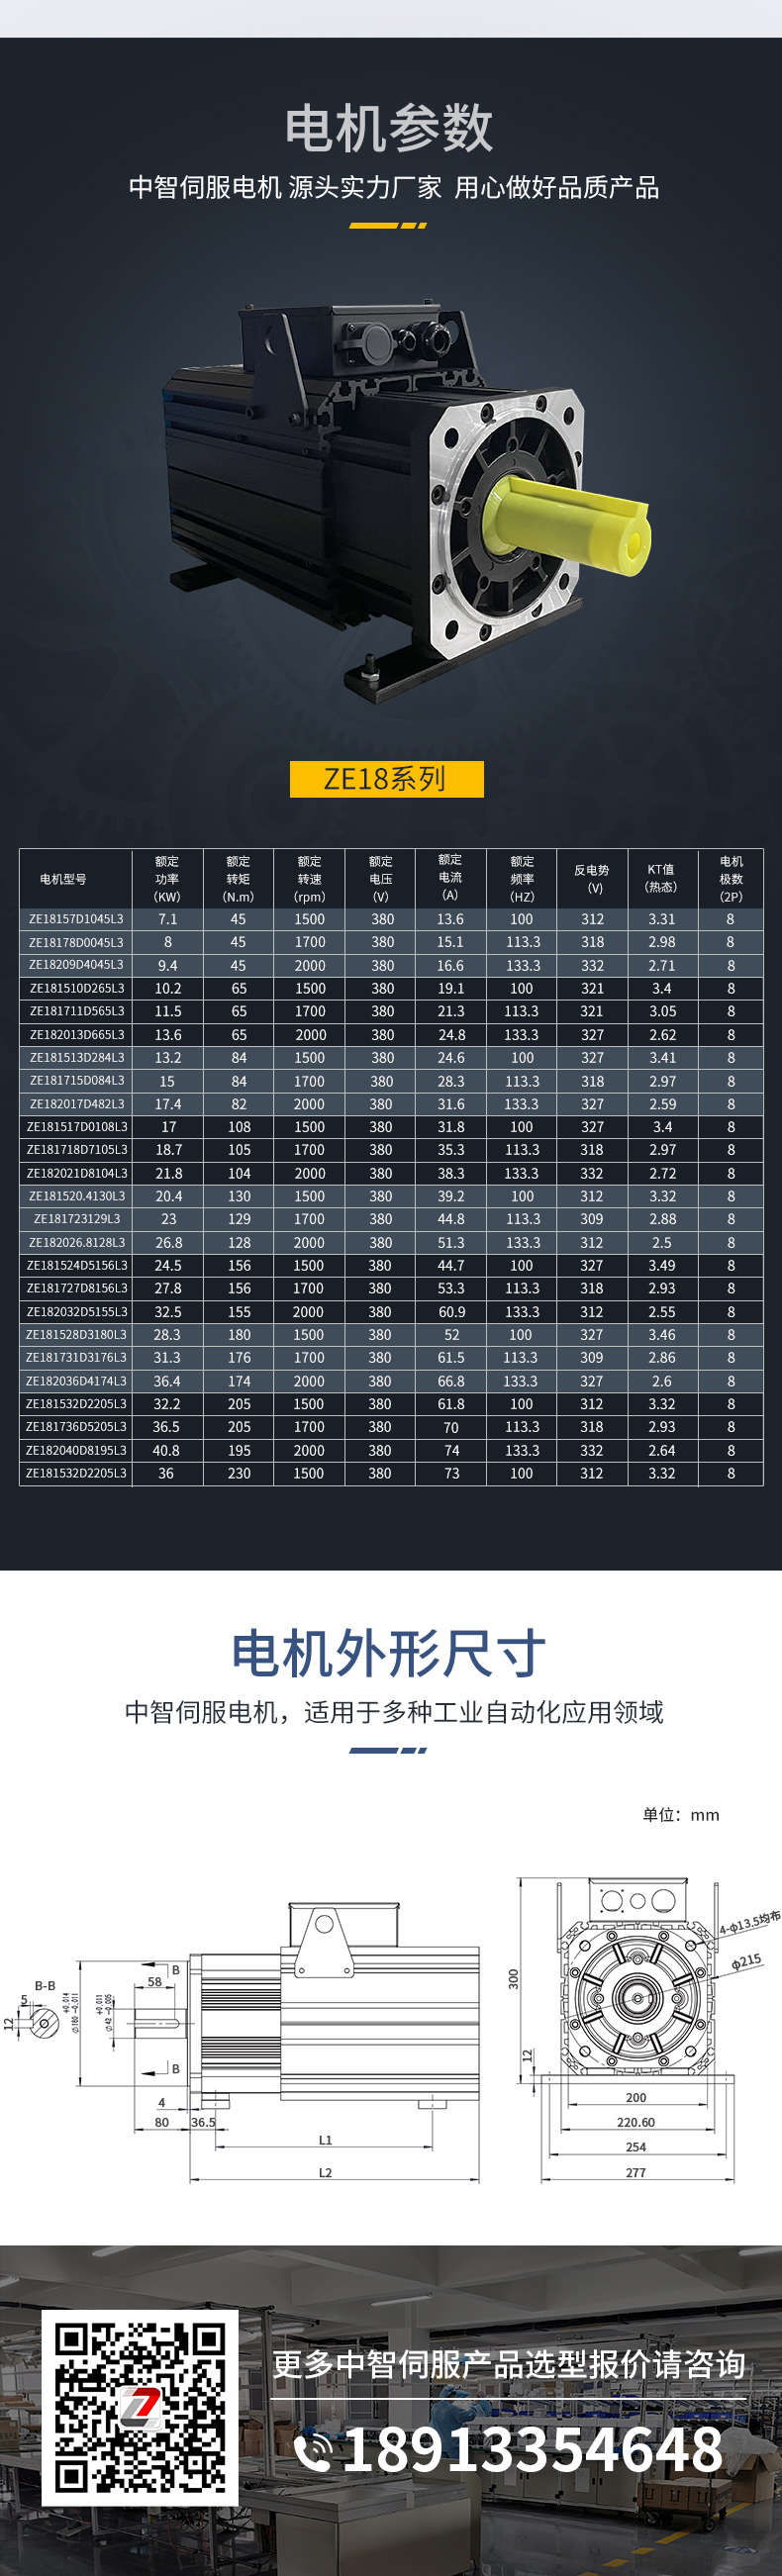 ZE18系列伺服电机详情页-爱采购_03.jpg